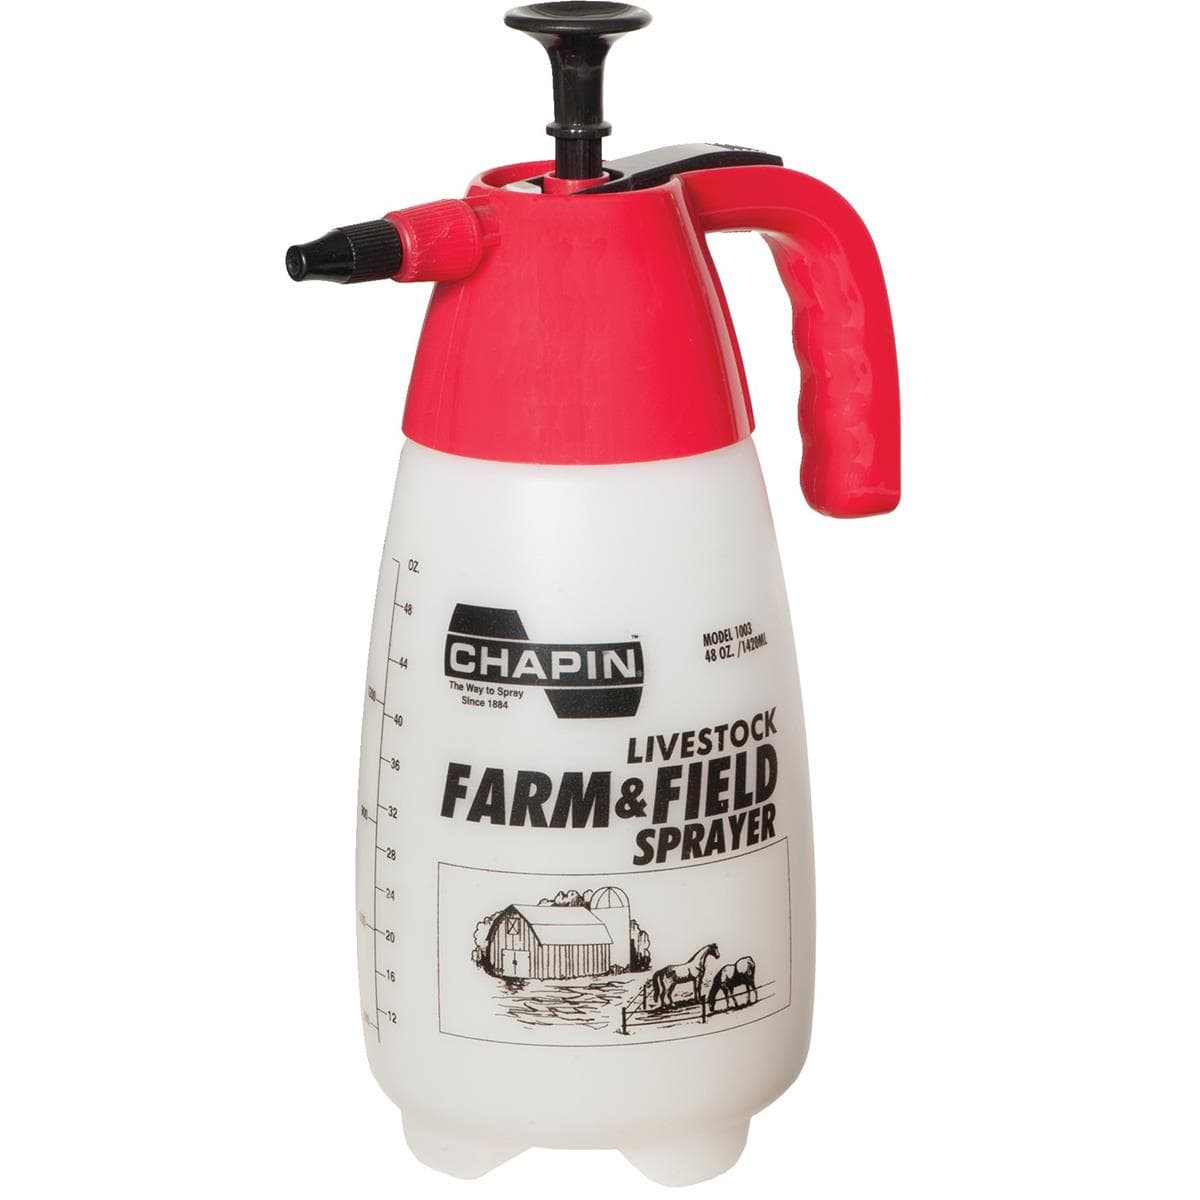 48-oz. Farm and Field Hand Sprayer